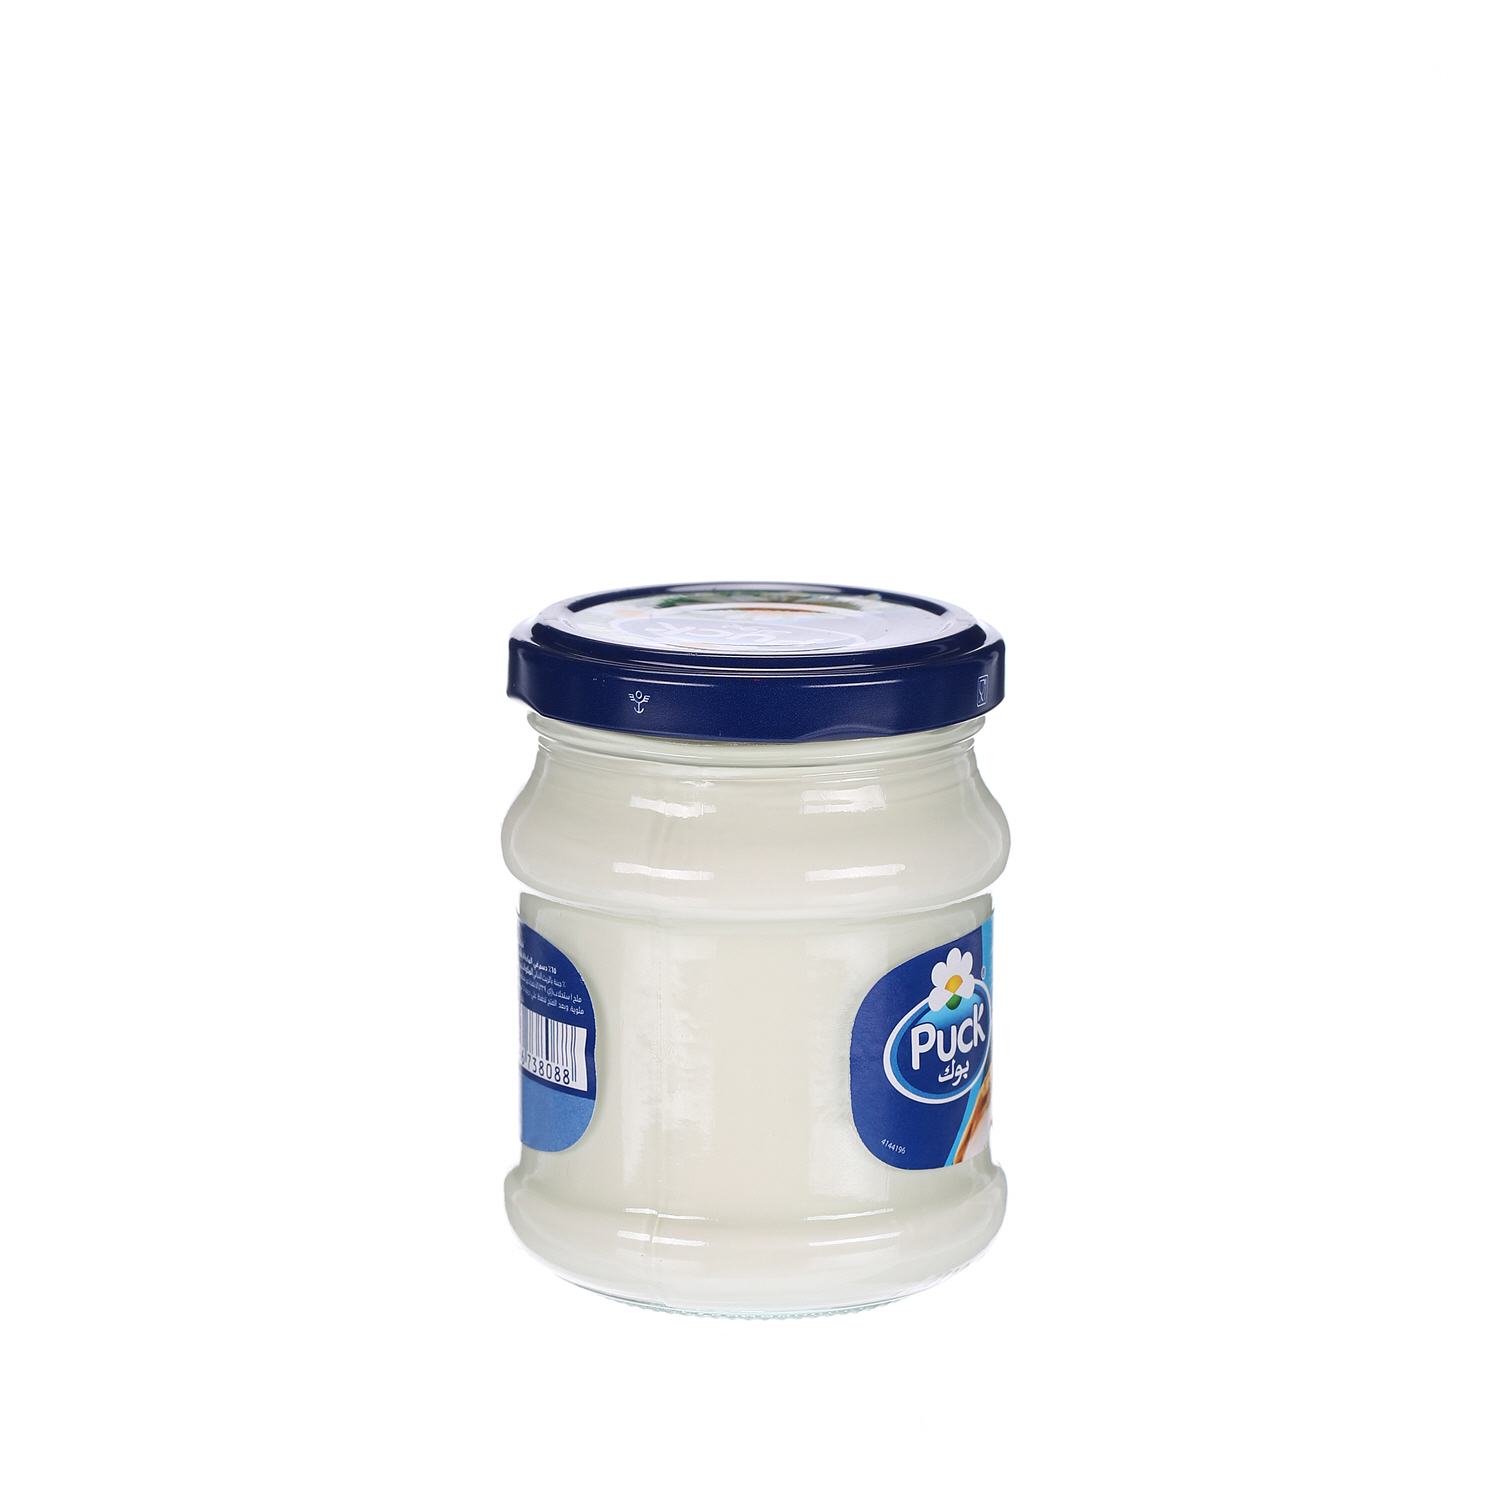 Puck Cheese Cream Jar 140gm